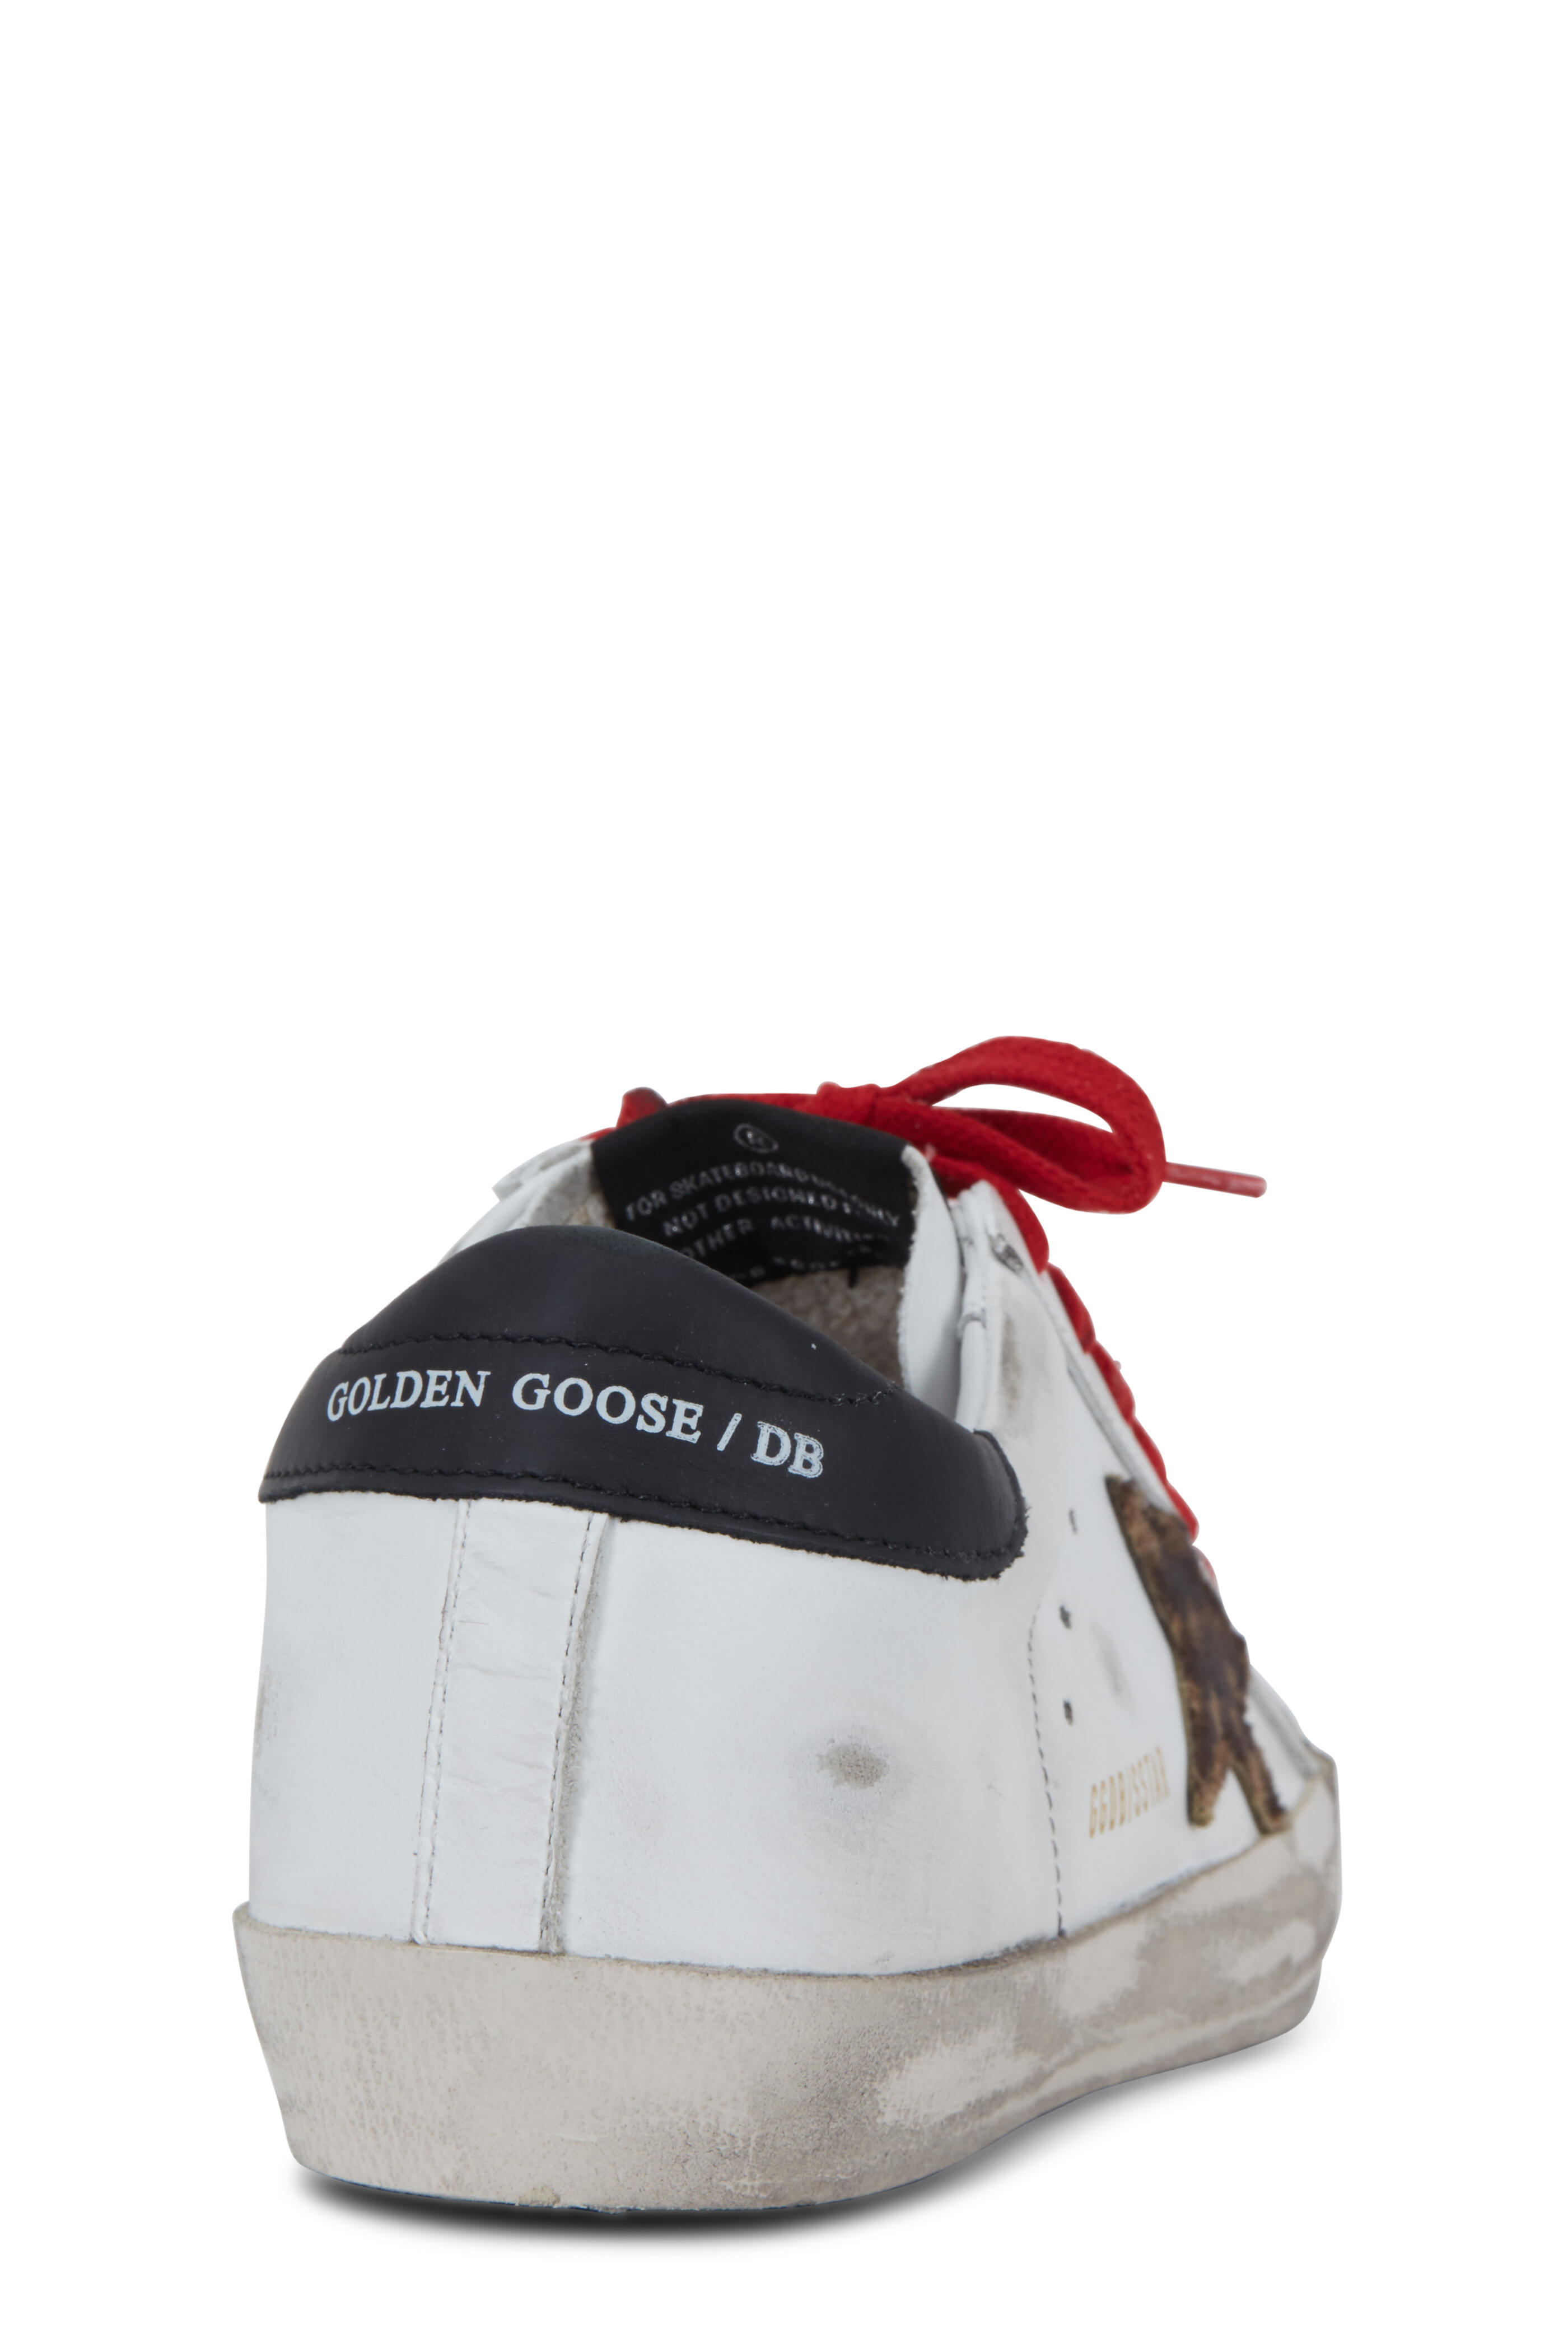 Perennial nuance Astrolabe Golden Goose - Superstar White Leather & Leopard Star Sneaker